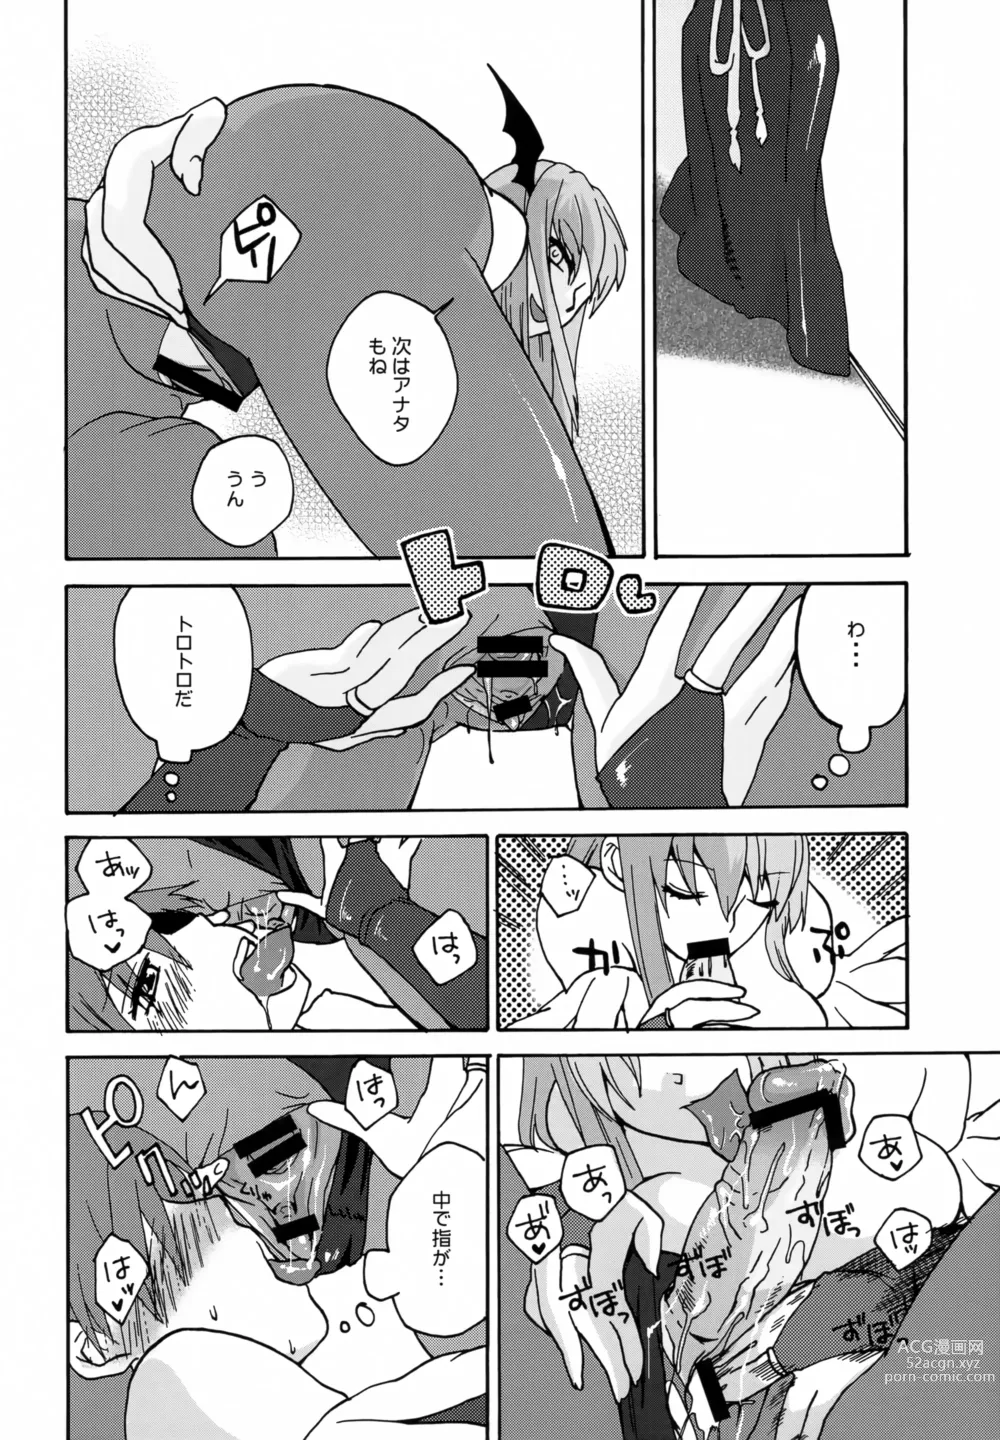 Page 21 of doujinshi regains